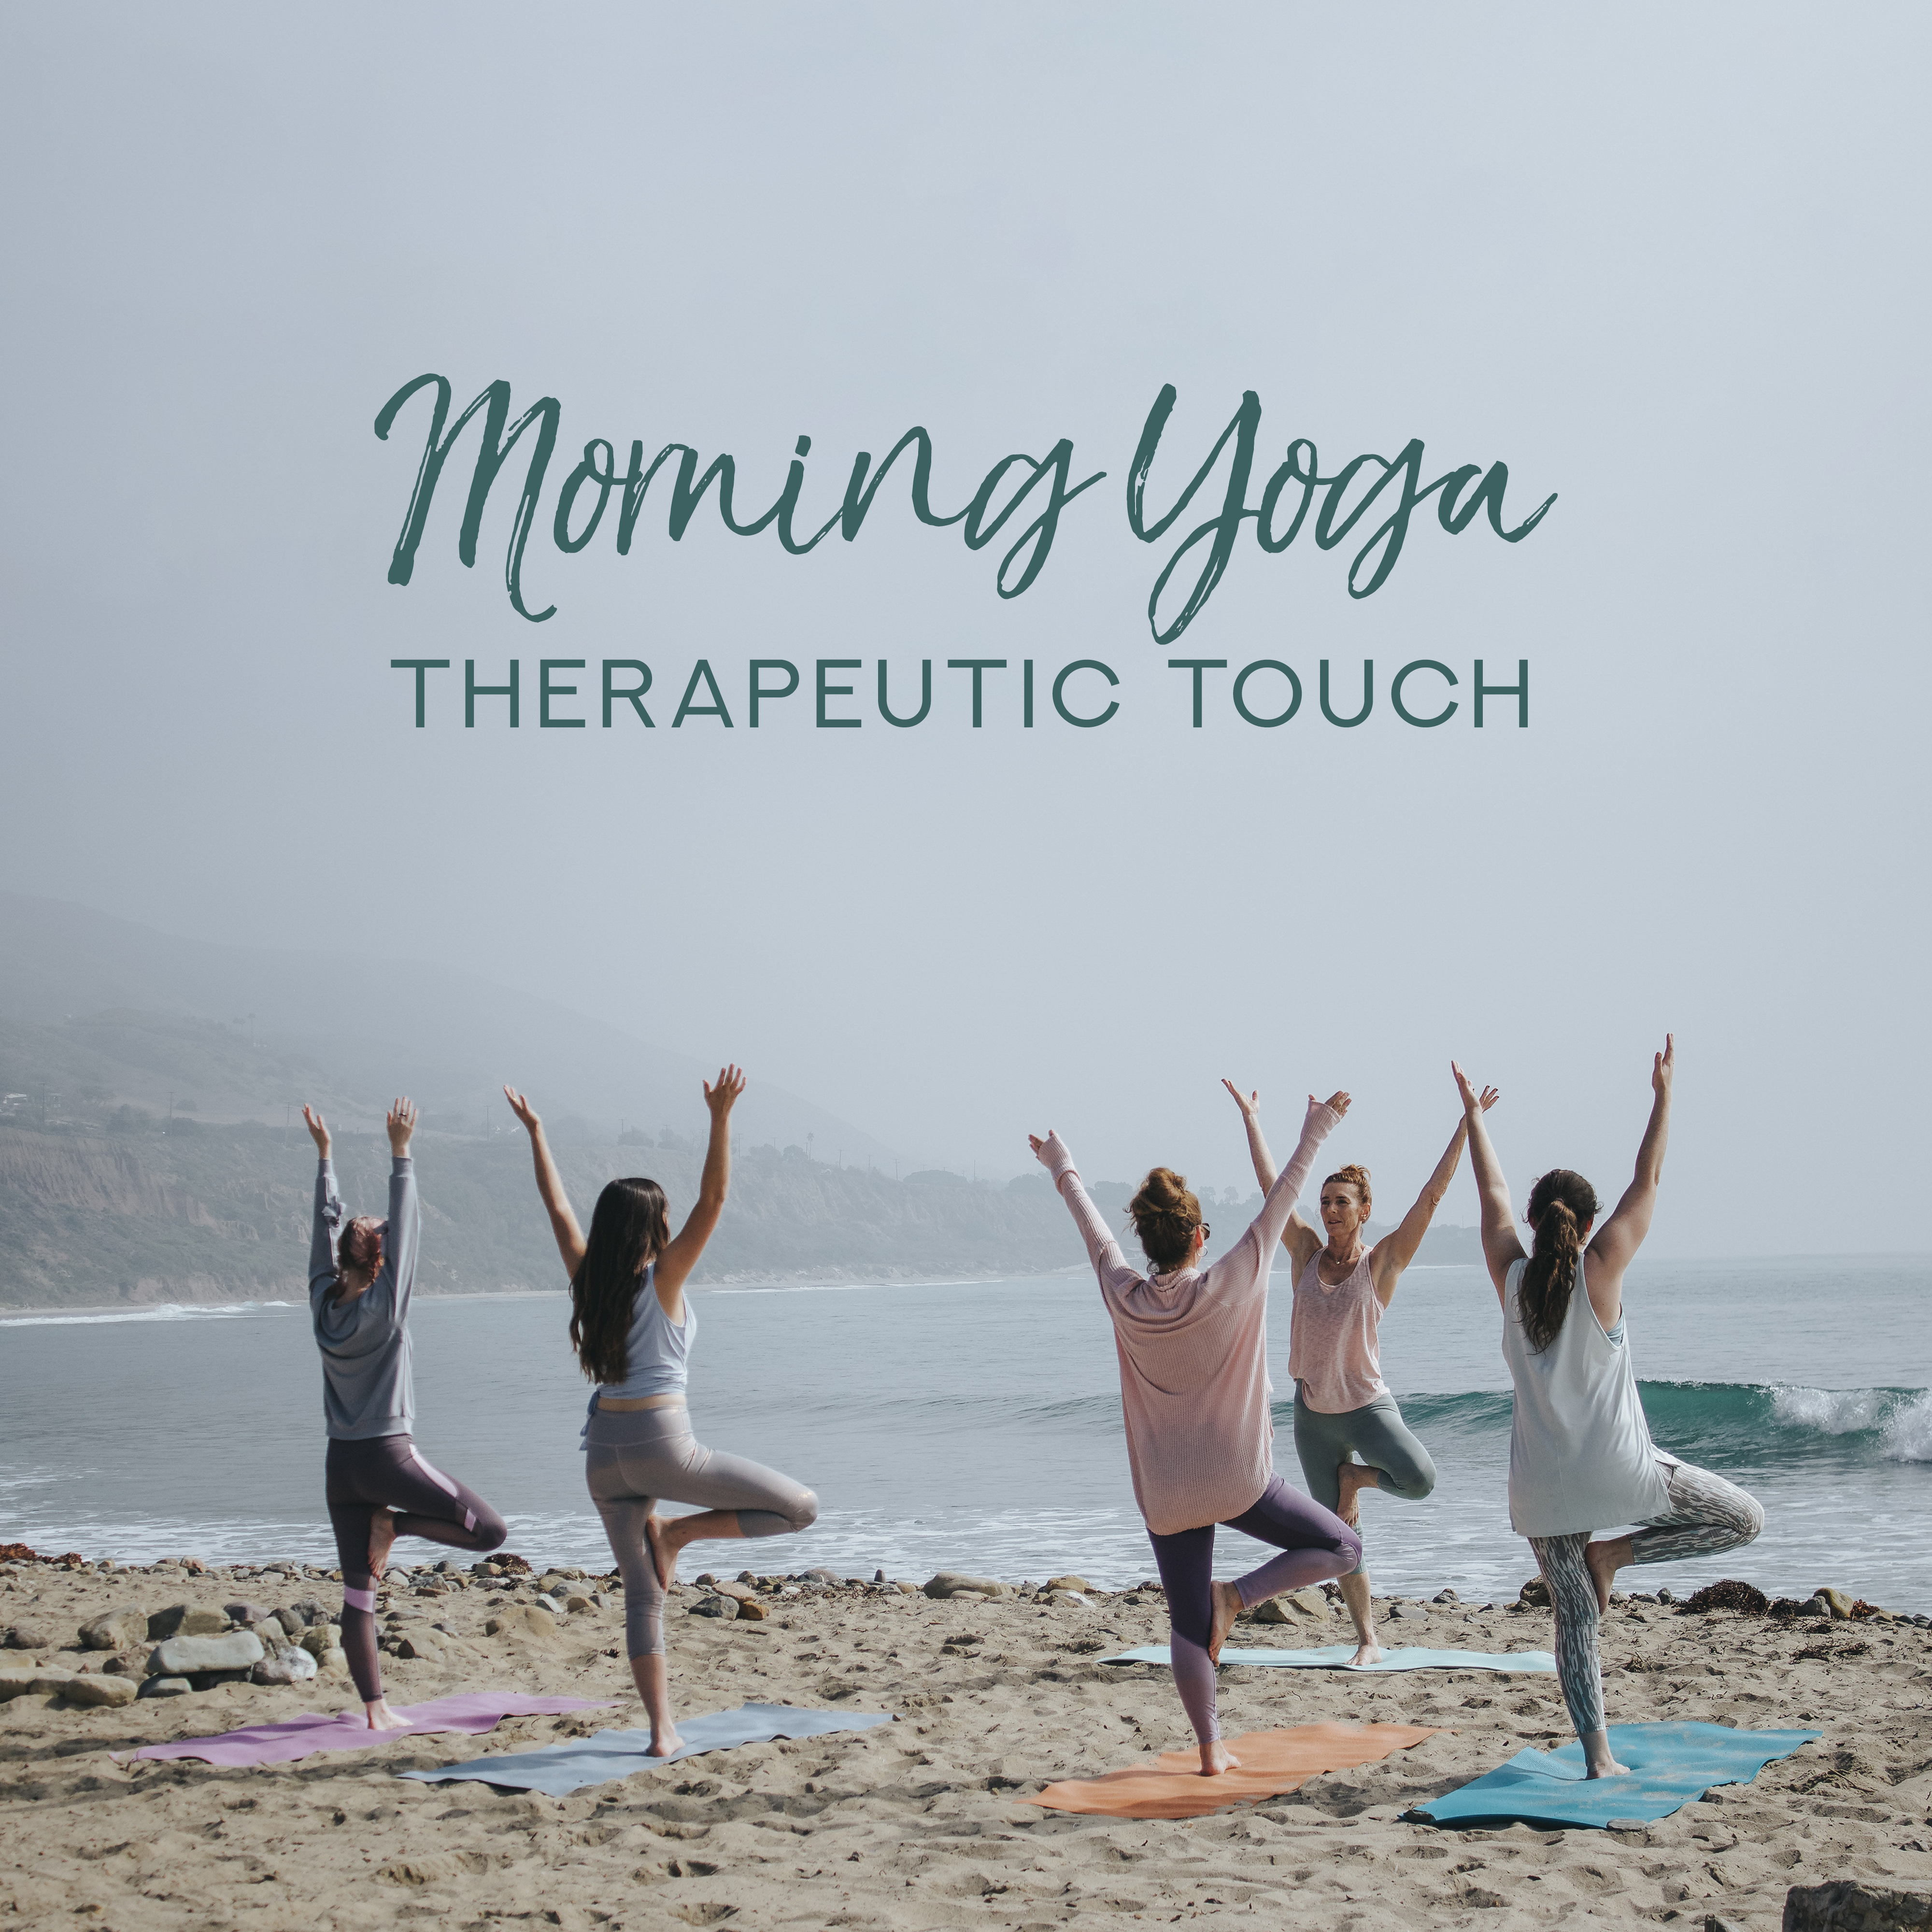 Morning Yoga Therapeutic Touch – New Age Music to Spiritual Journey, Reiki Training, Deep Meditation, Chakra Healing